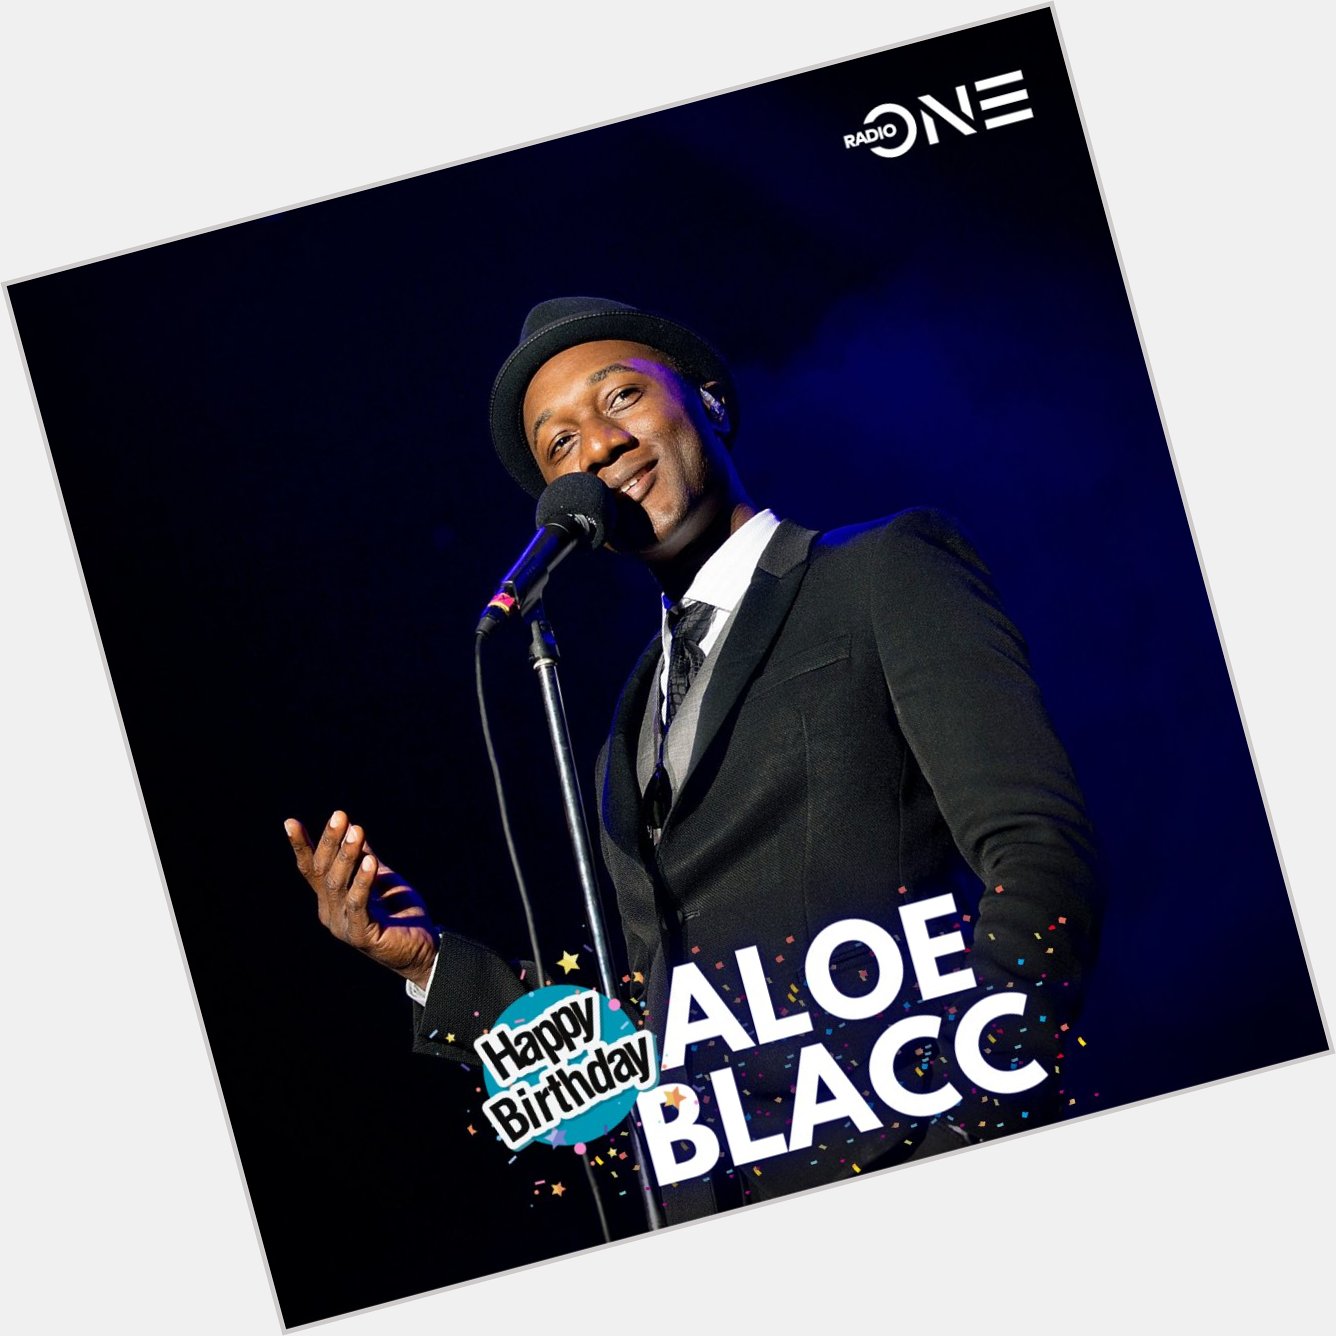 42 where?! Happy Birthday to Aloe Blacc  